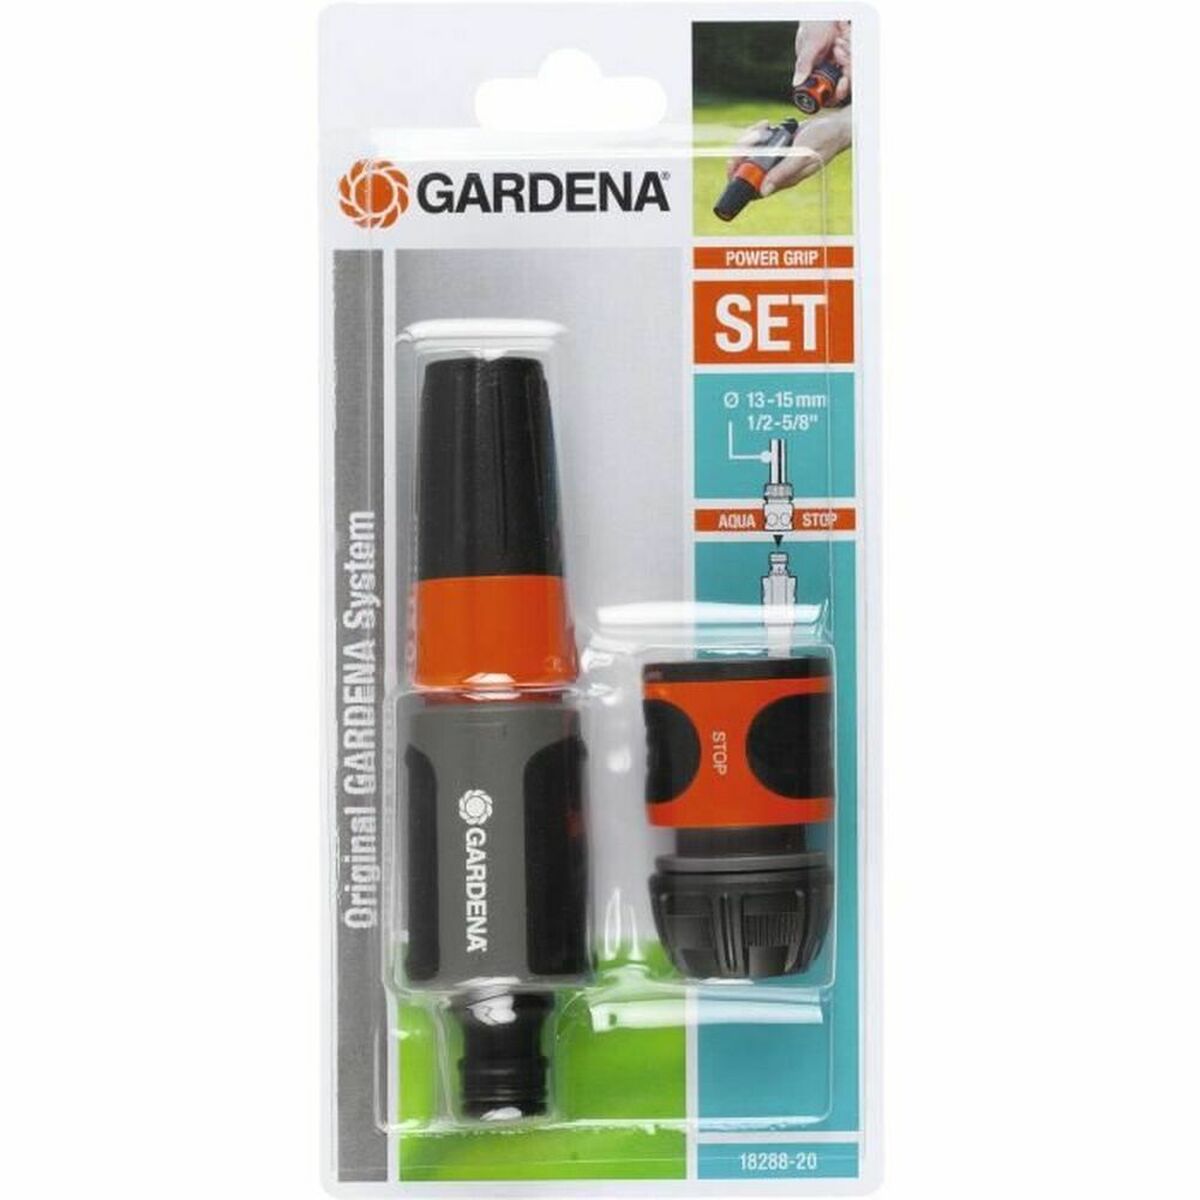 Set Gardena 18288-20 Kit per l'irrigazione